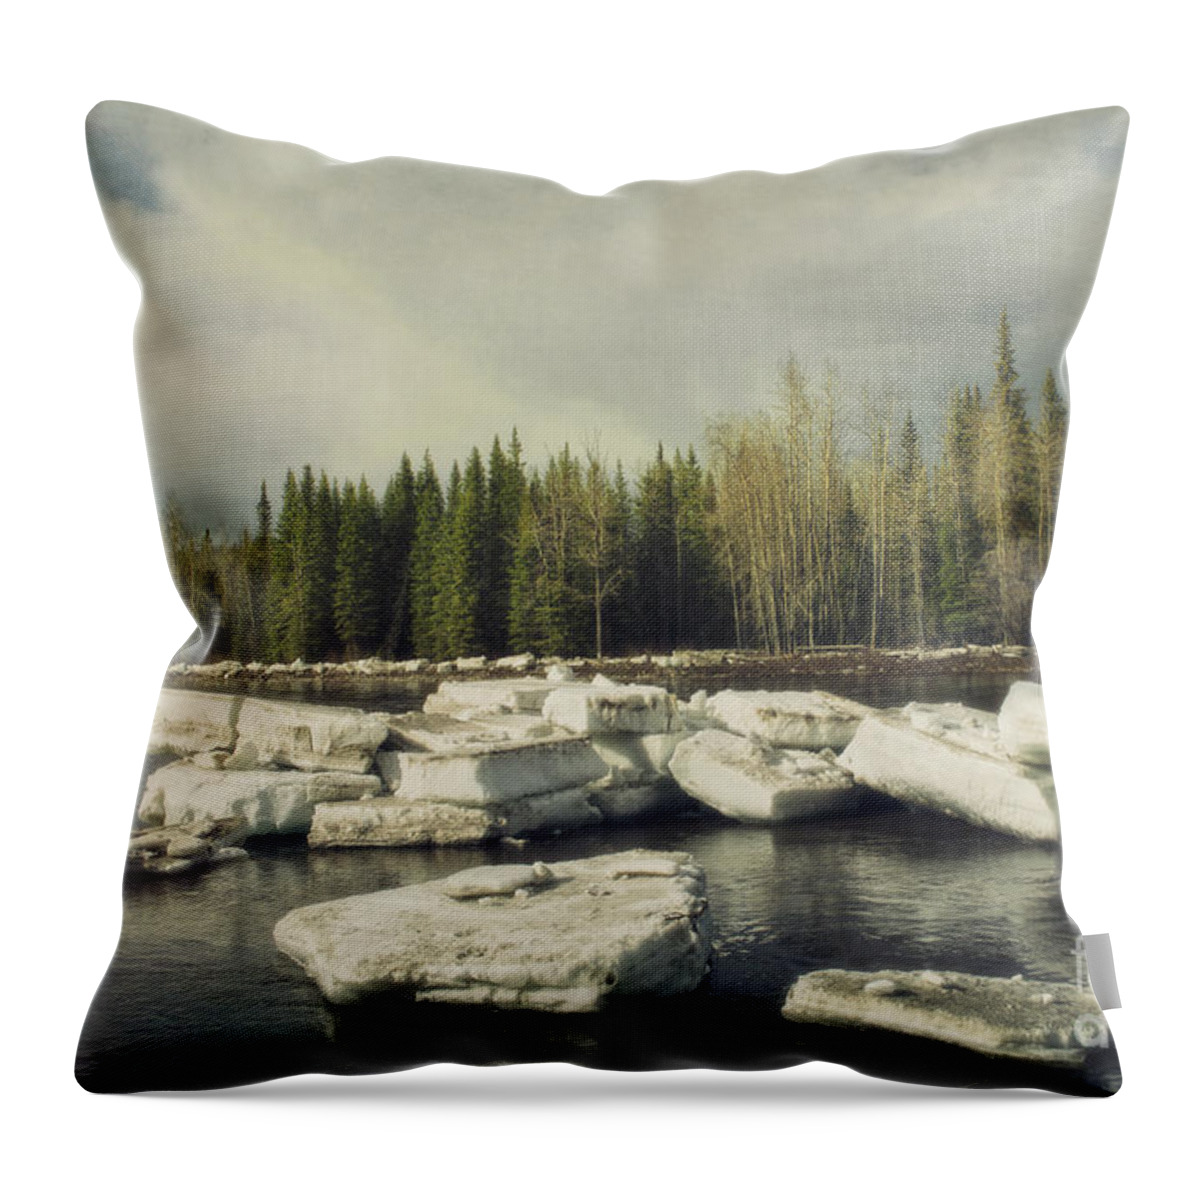 Klondike Throw Pillow featuring the photograph Klondike River Ice Break by Priska Wettstein